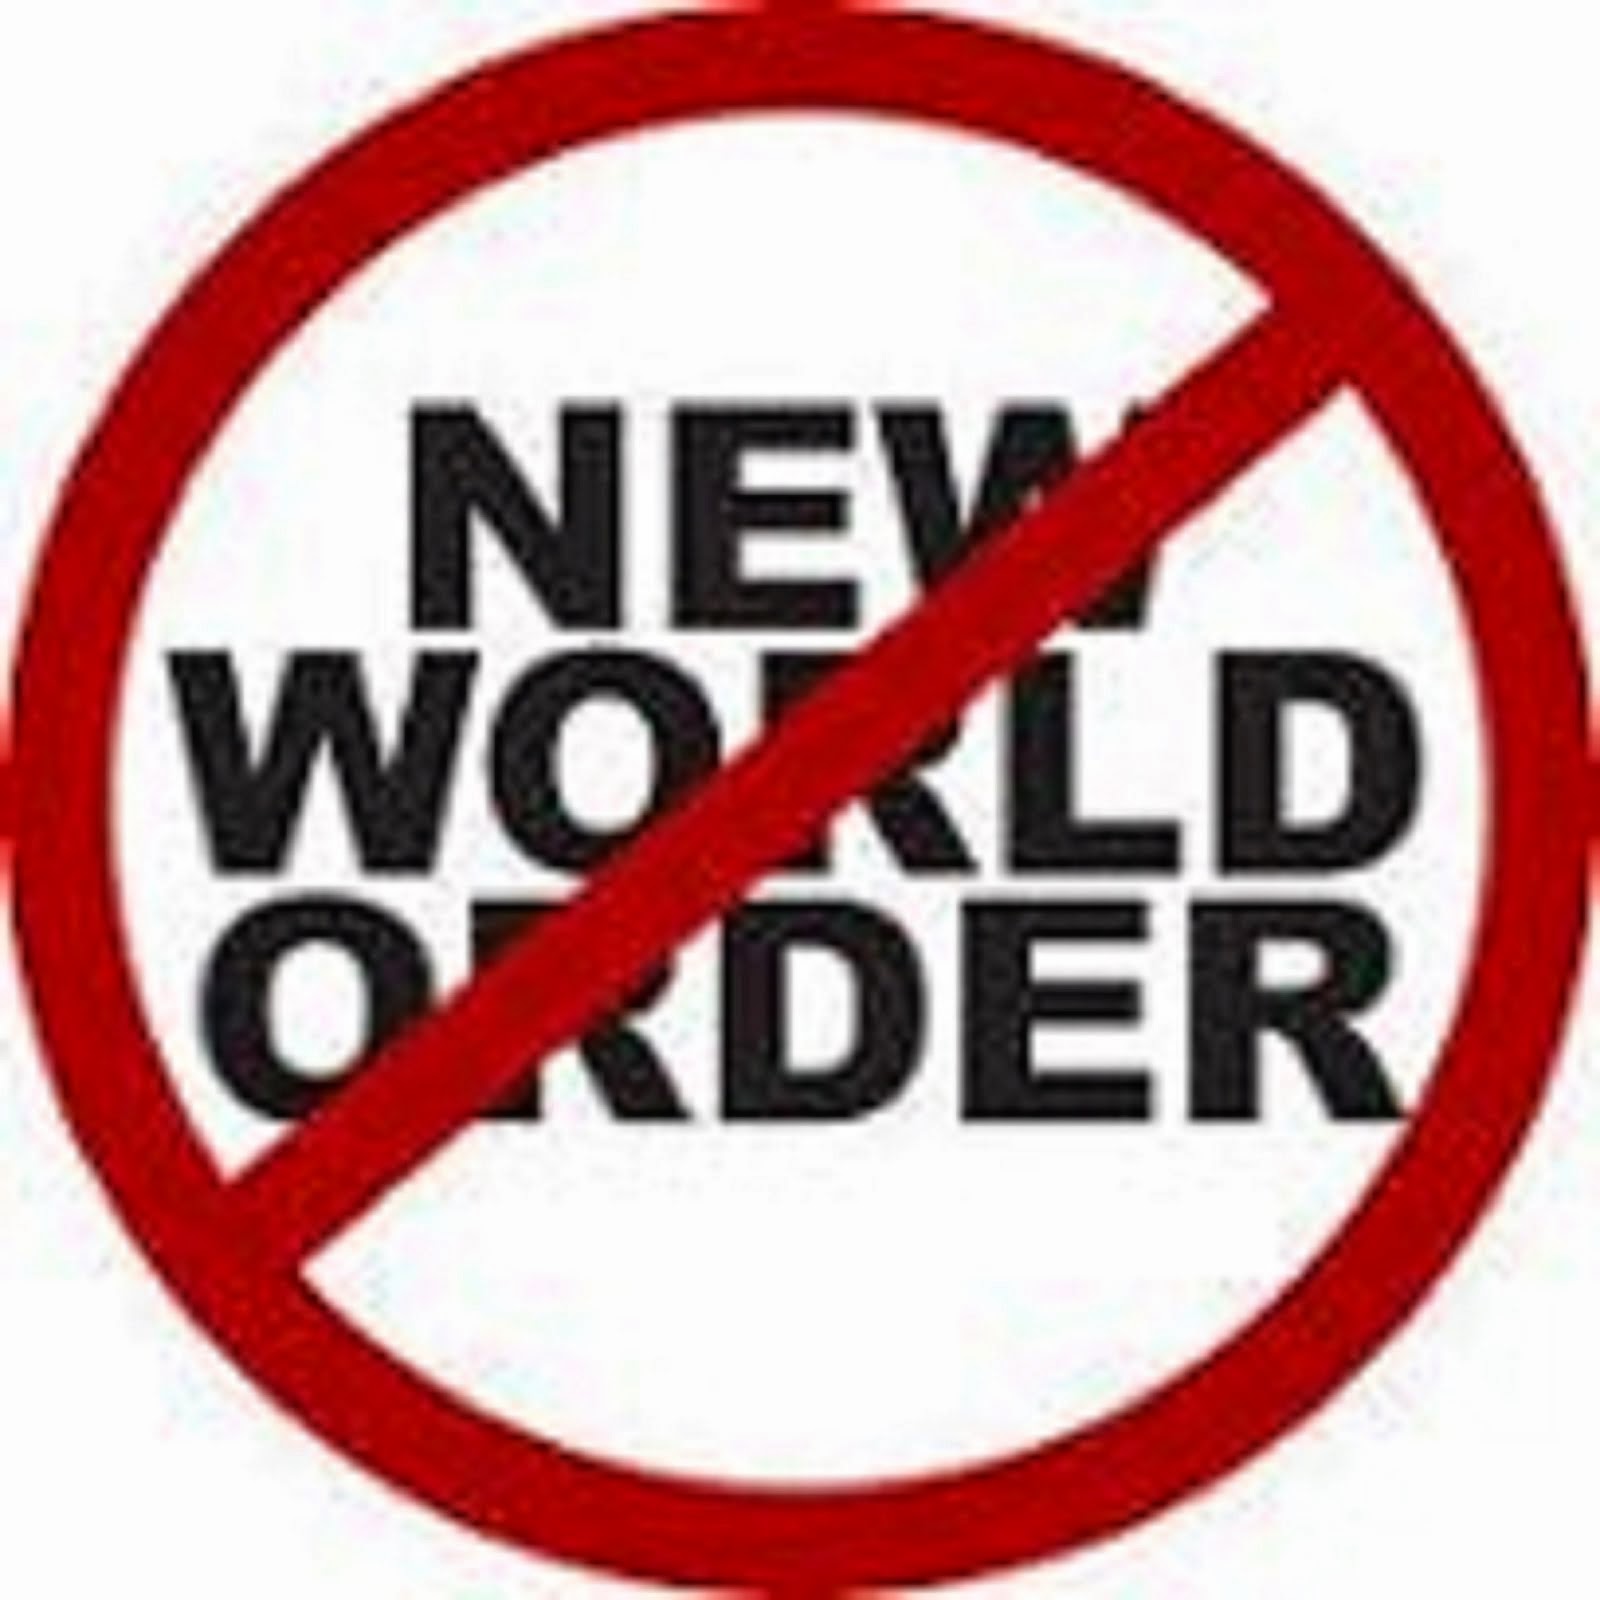 NO NEW WORLD ORDER